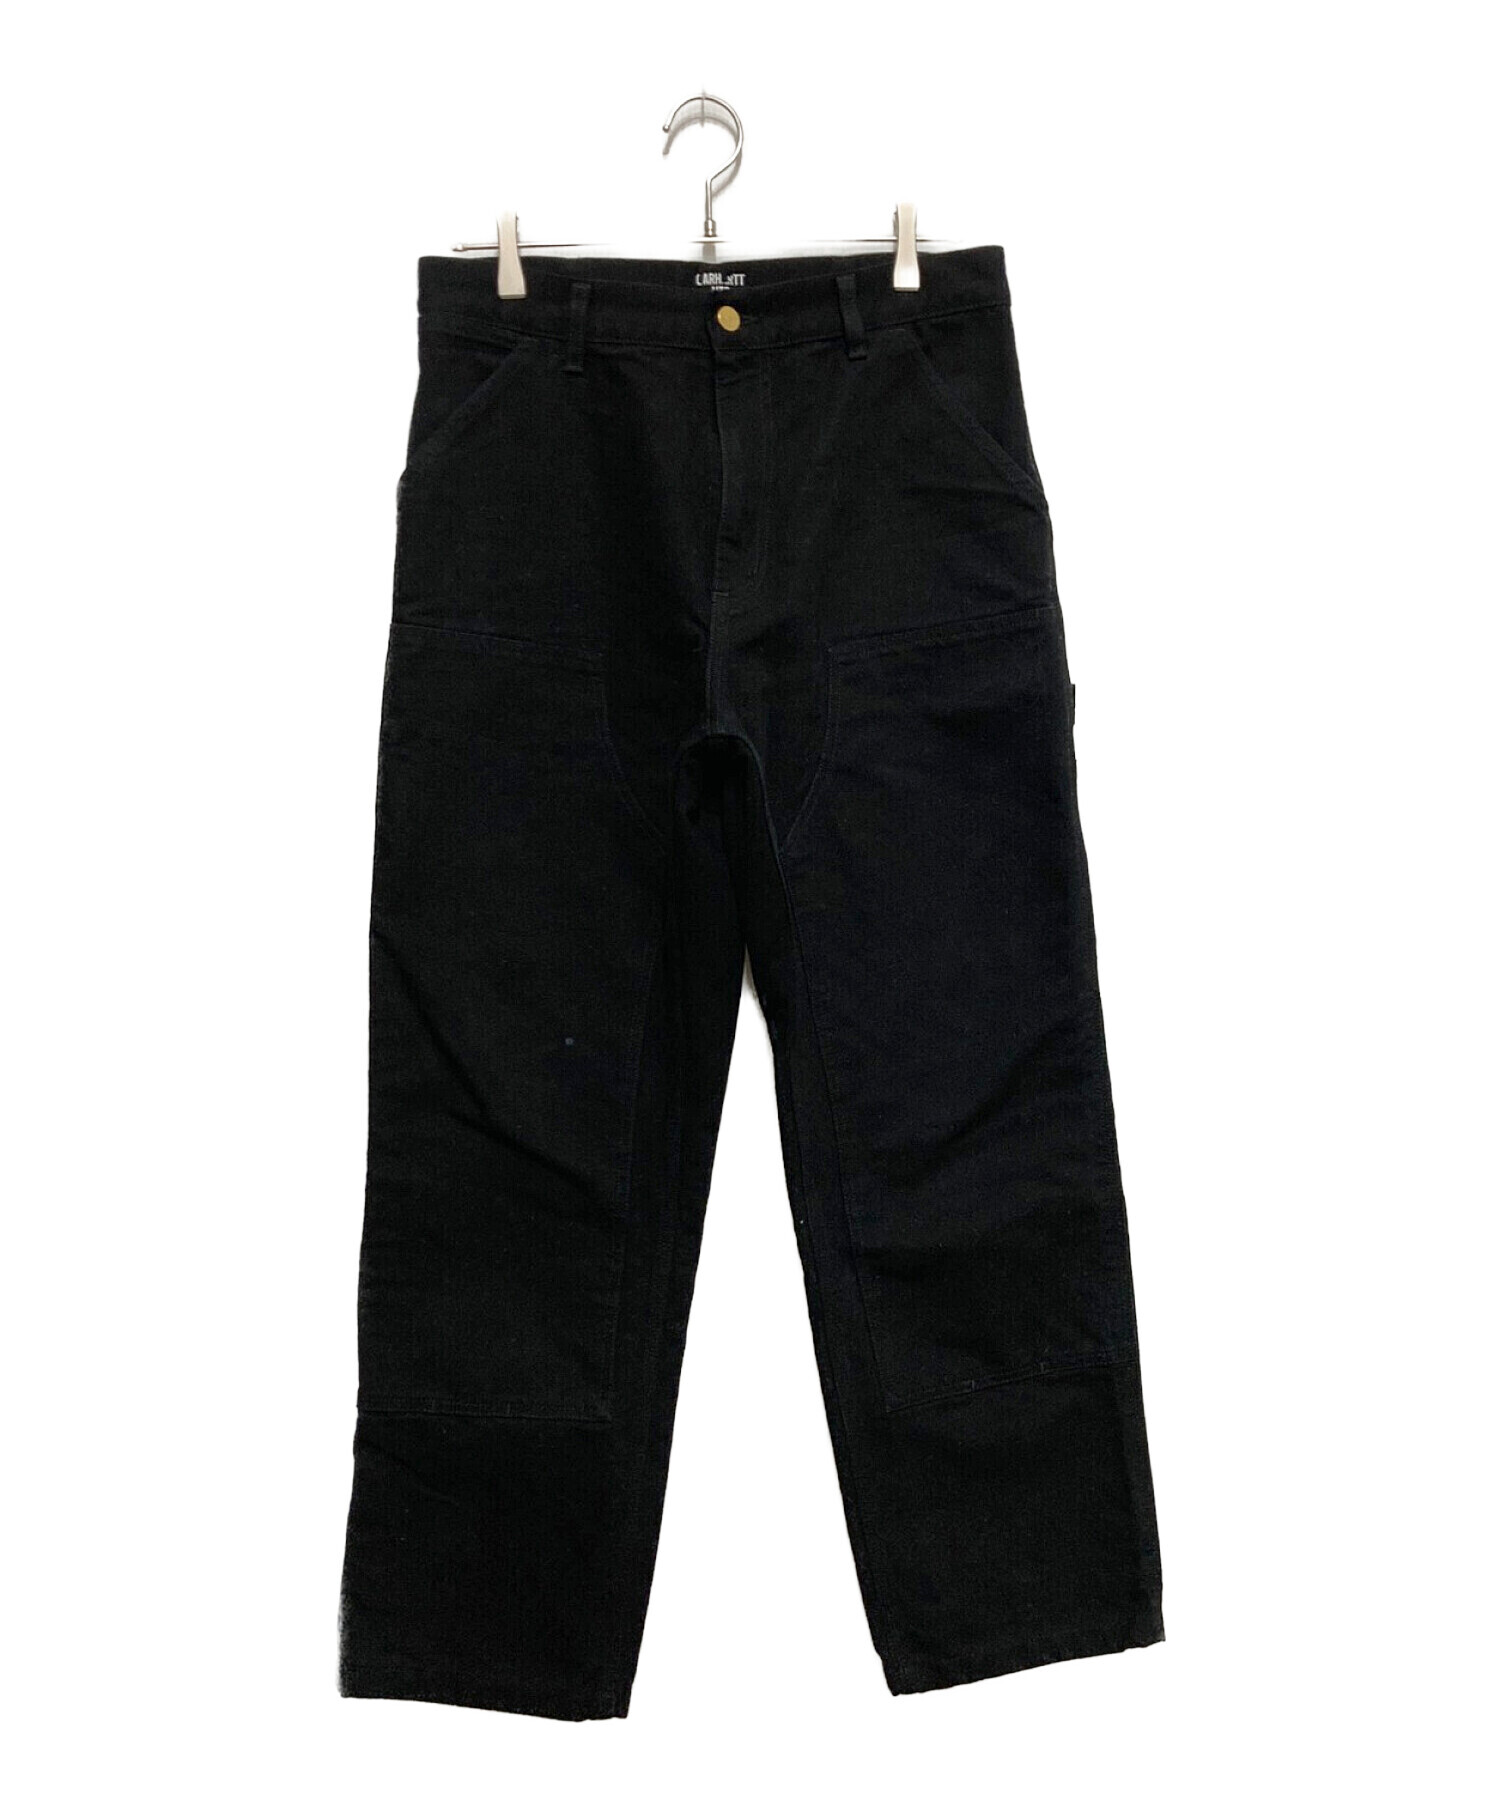 Carhartt WIP (カーハートダブリューアイピー) DOUBLE KNEE PANT ブラック サイズ:76㎝（W30）